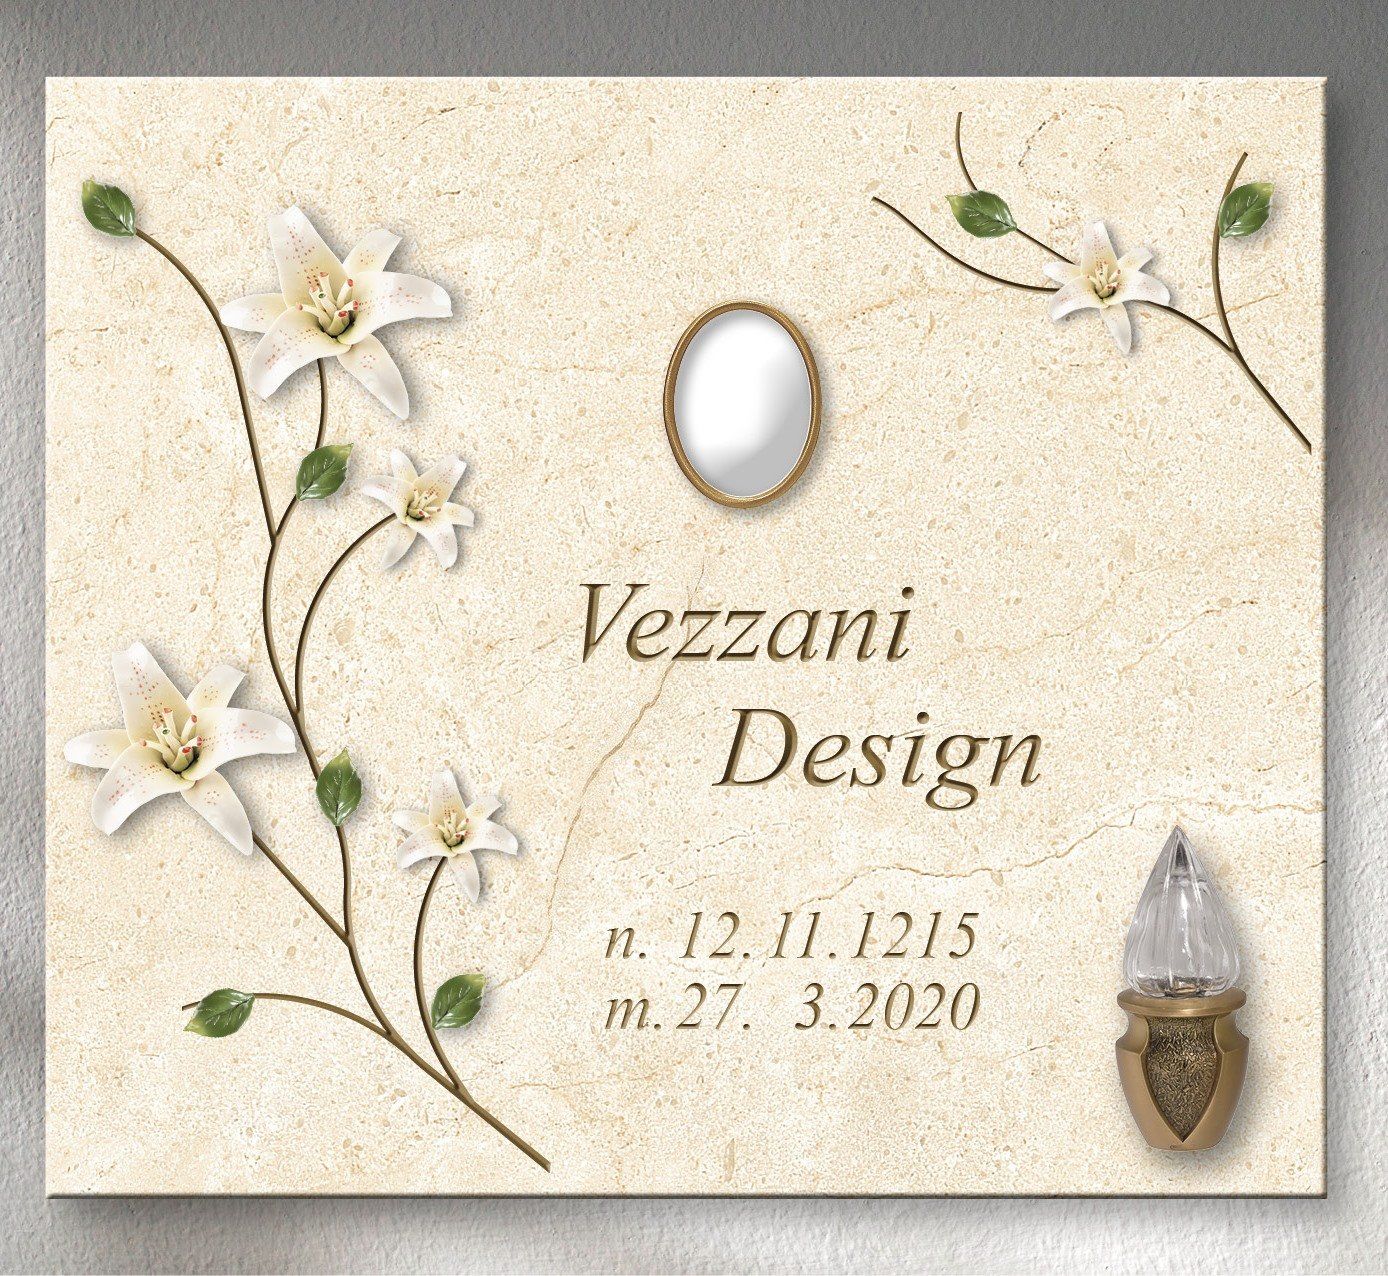 Niche with personalized engraving vezzani design 2